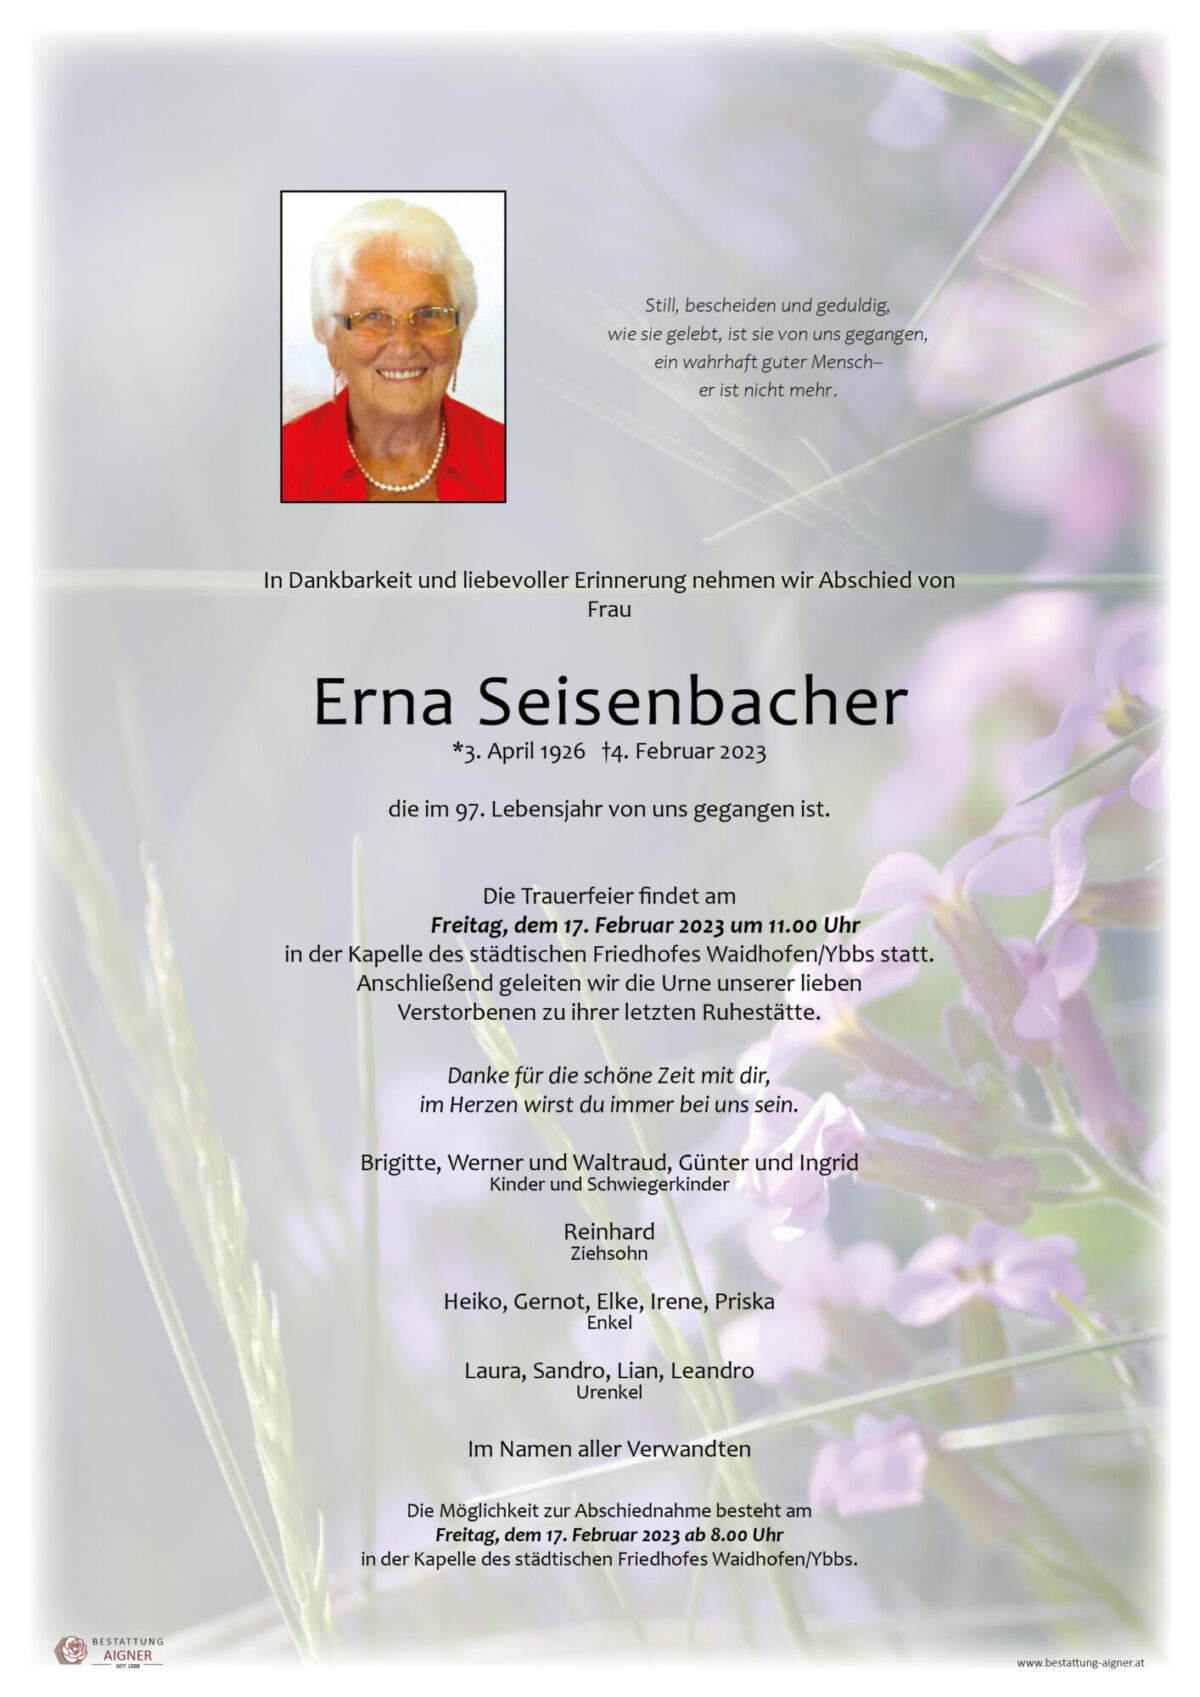 Erna Seisenbacher